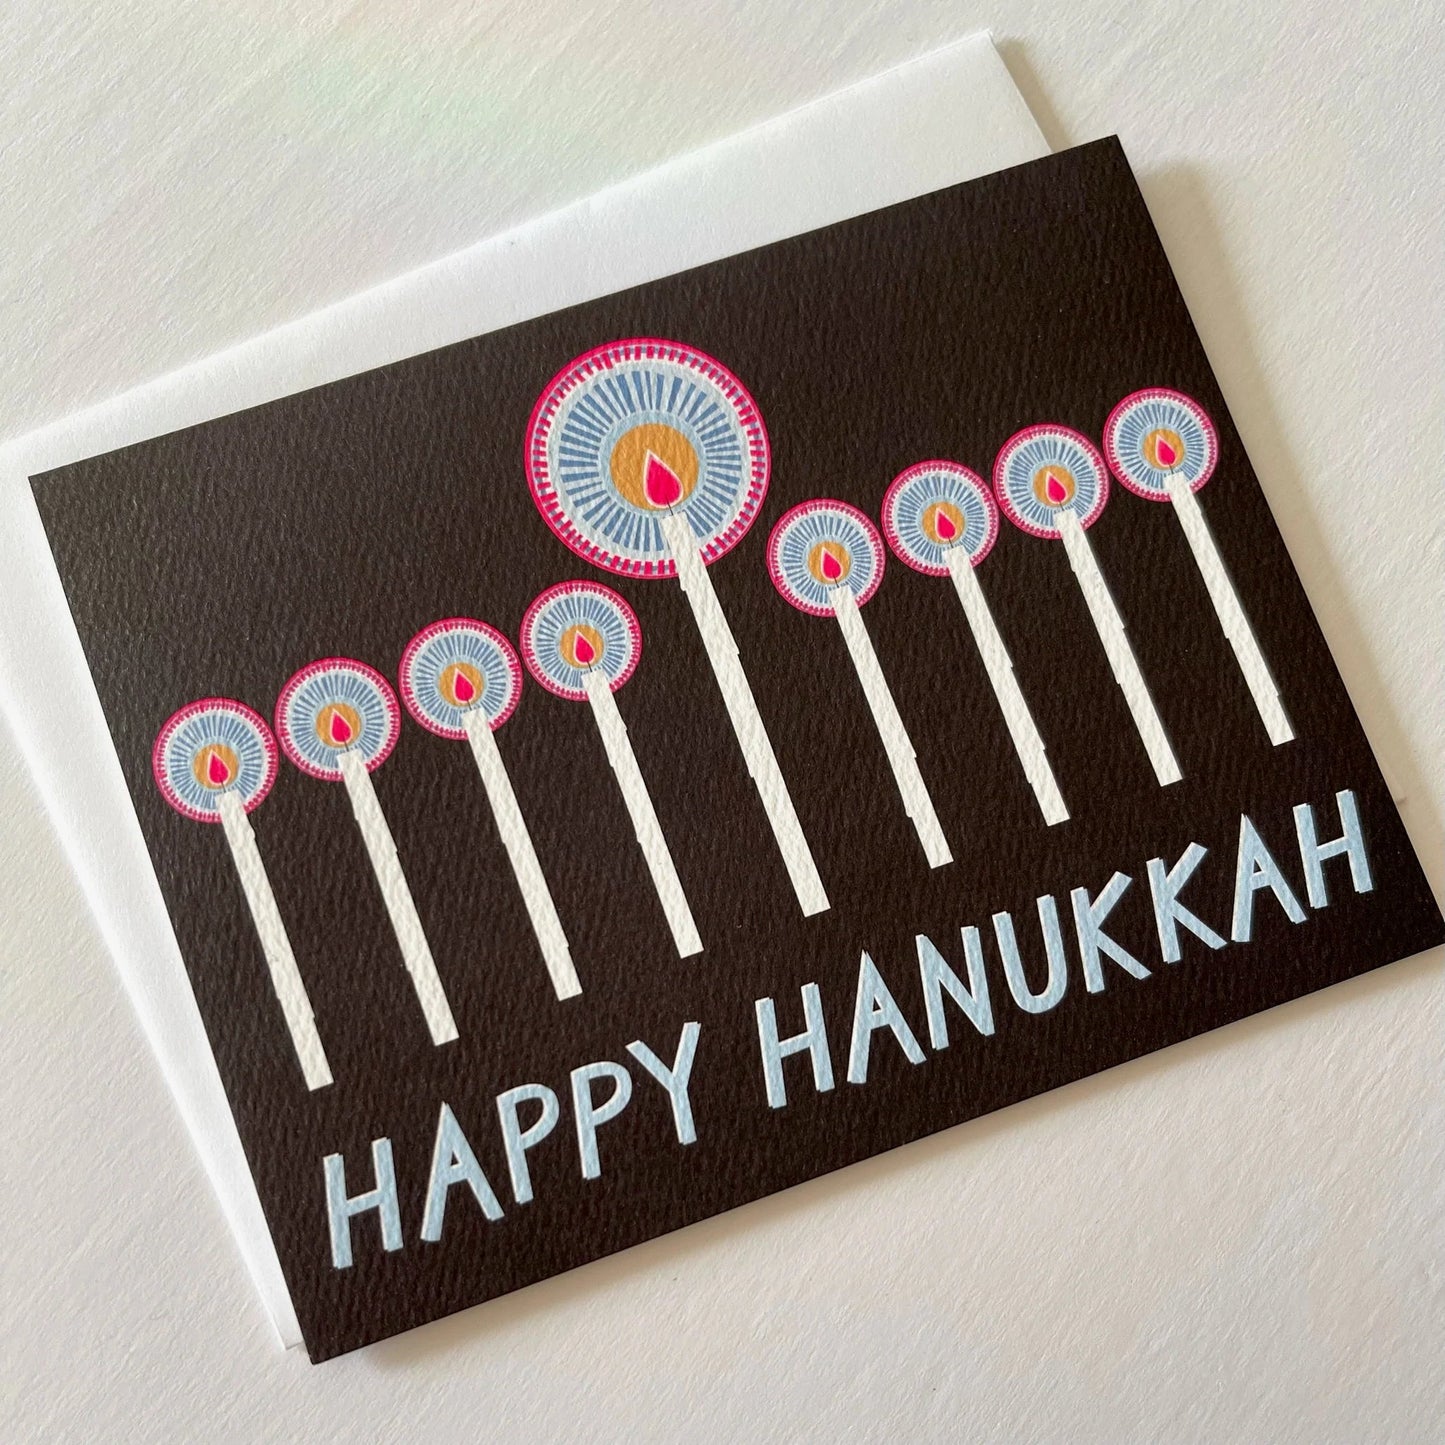 HAPPY HANUKKAH CANDLES CARD